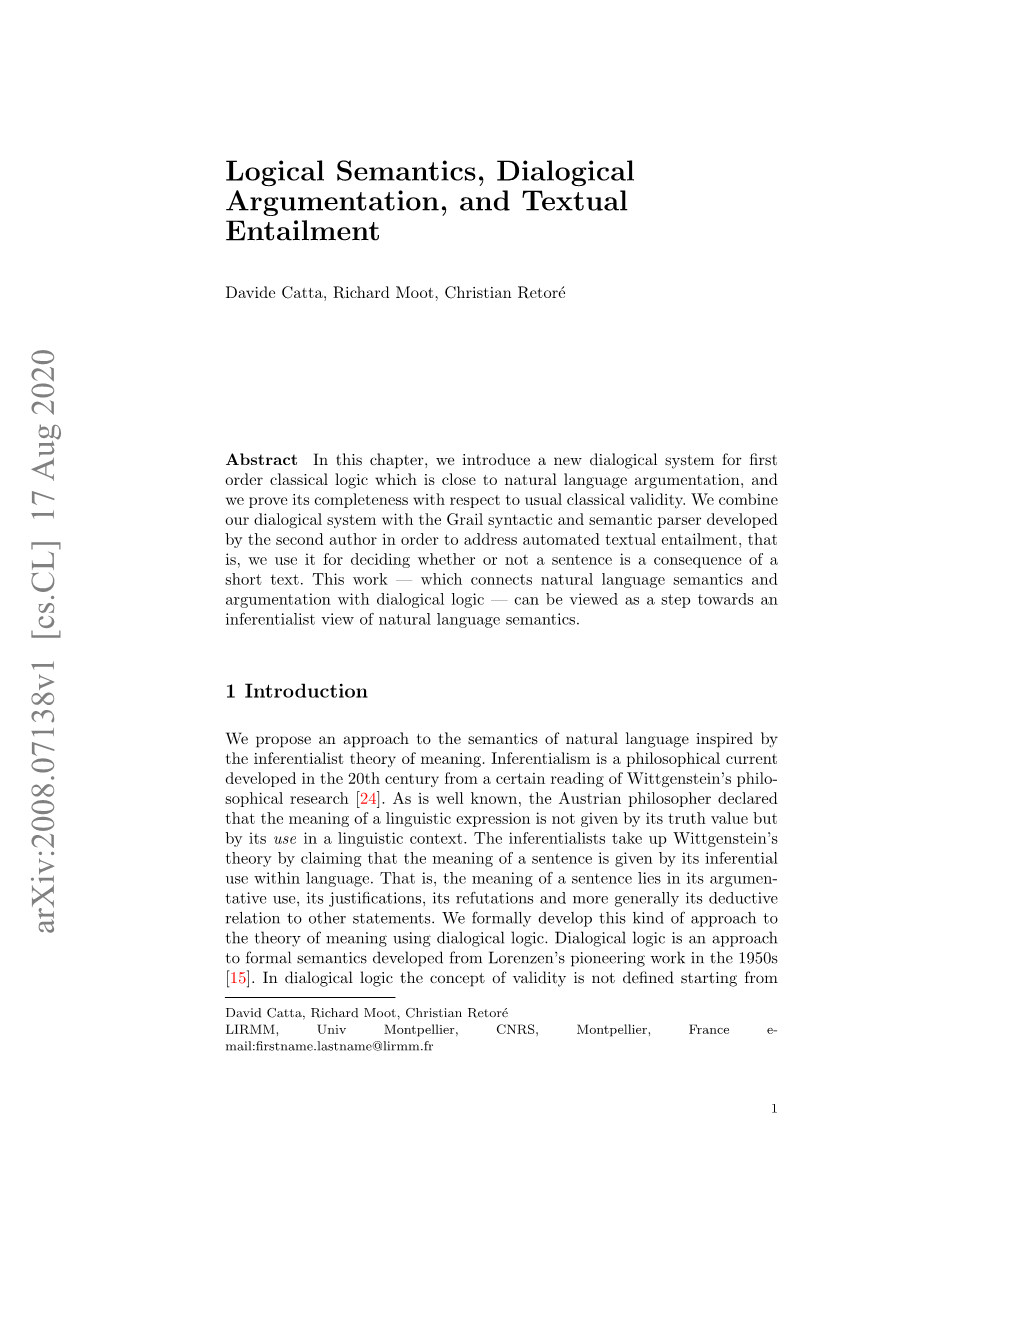 Logical Semantics, Dialogical Argumentation, and Textual Entailment